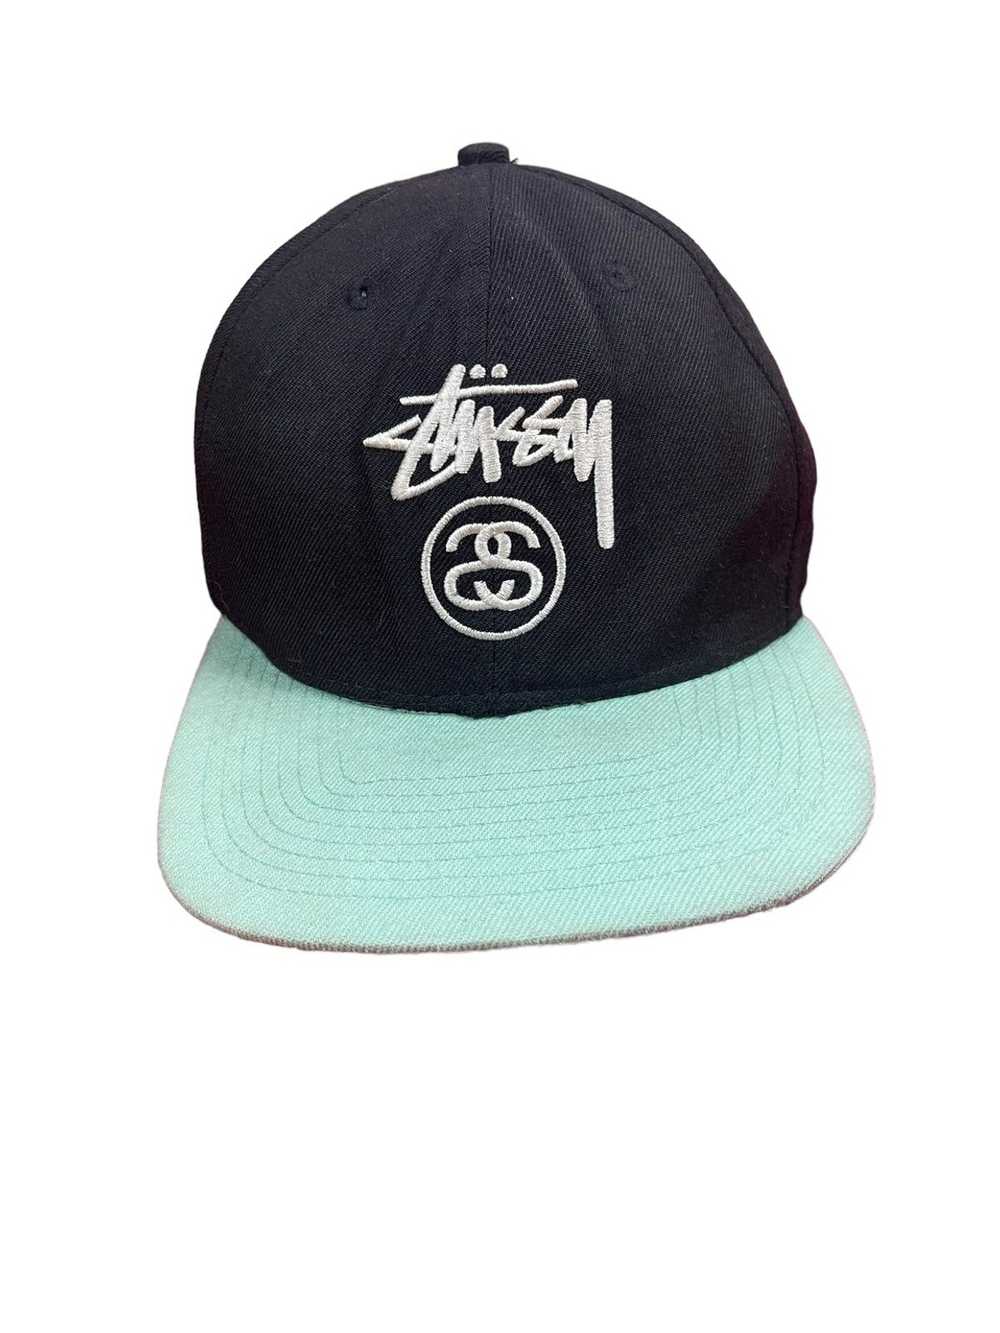 Starter × Stussy Stussy cap hat snapback - image 1